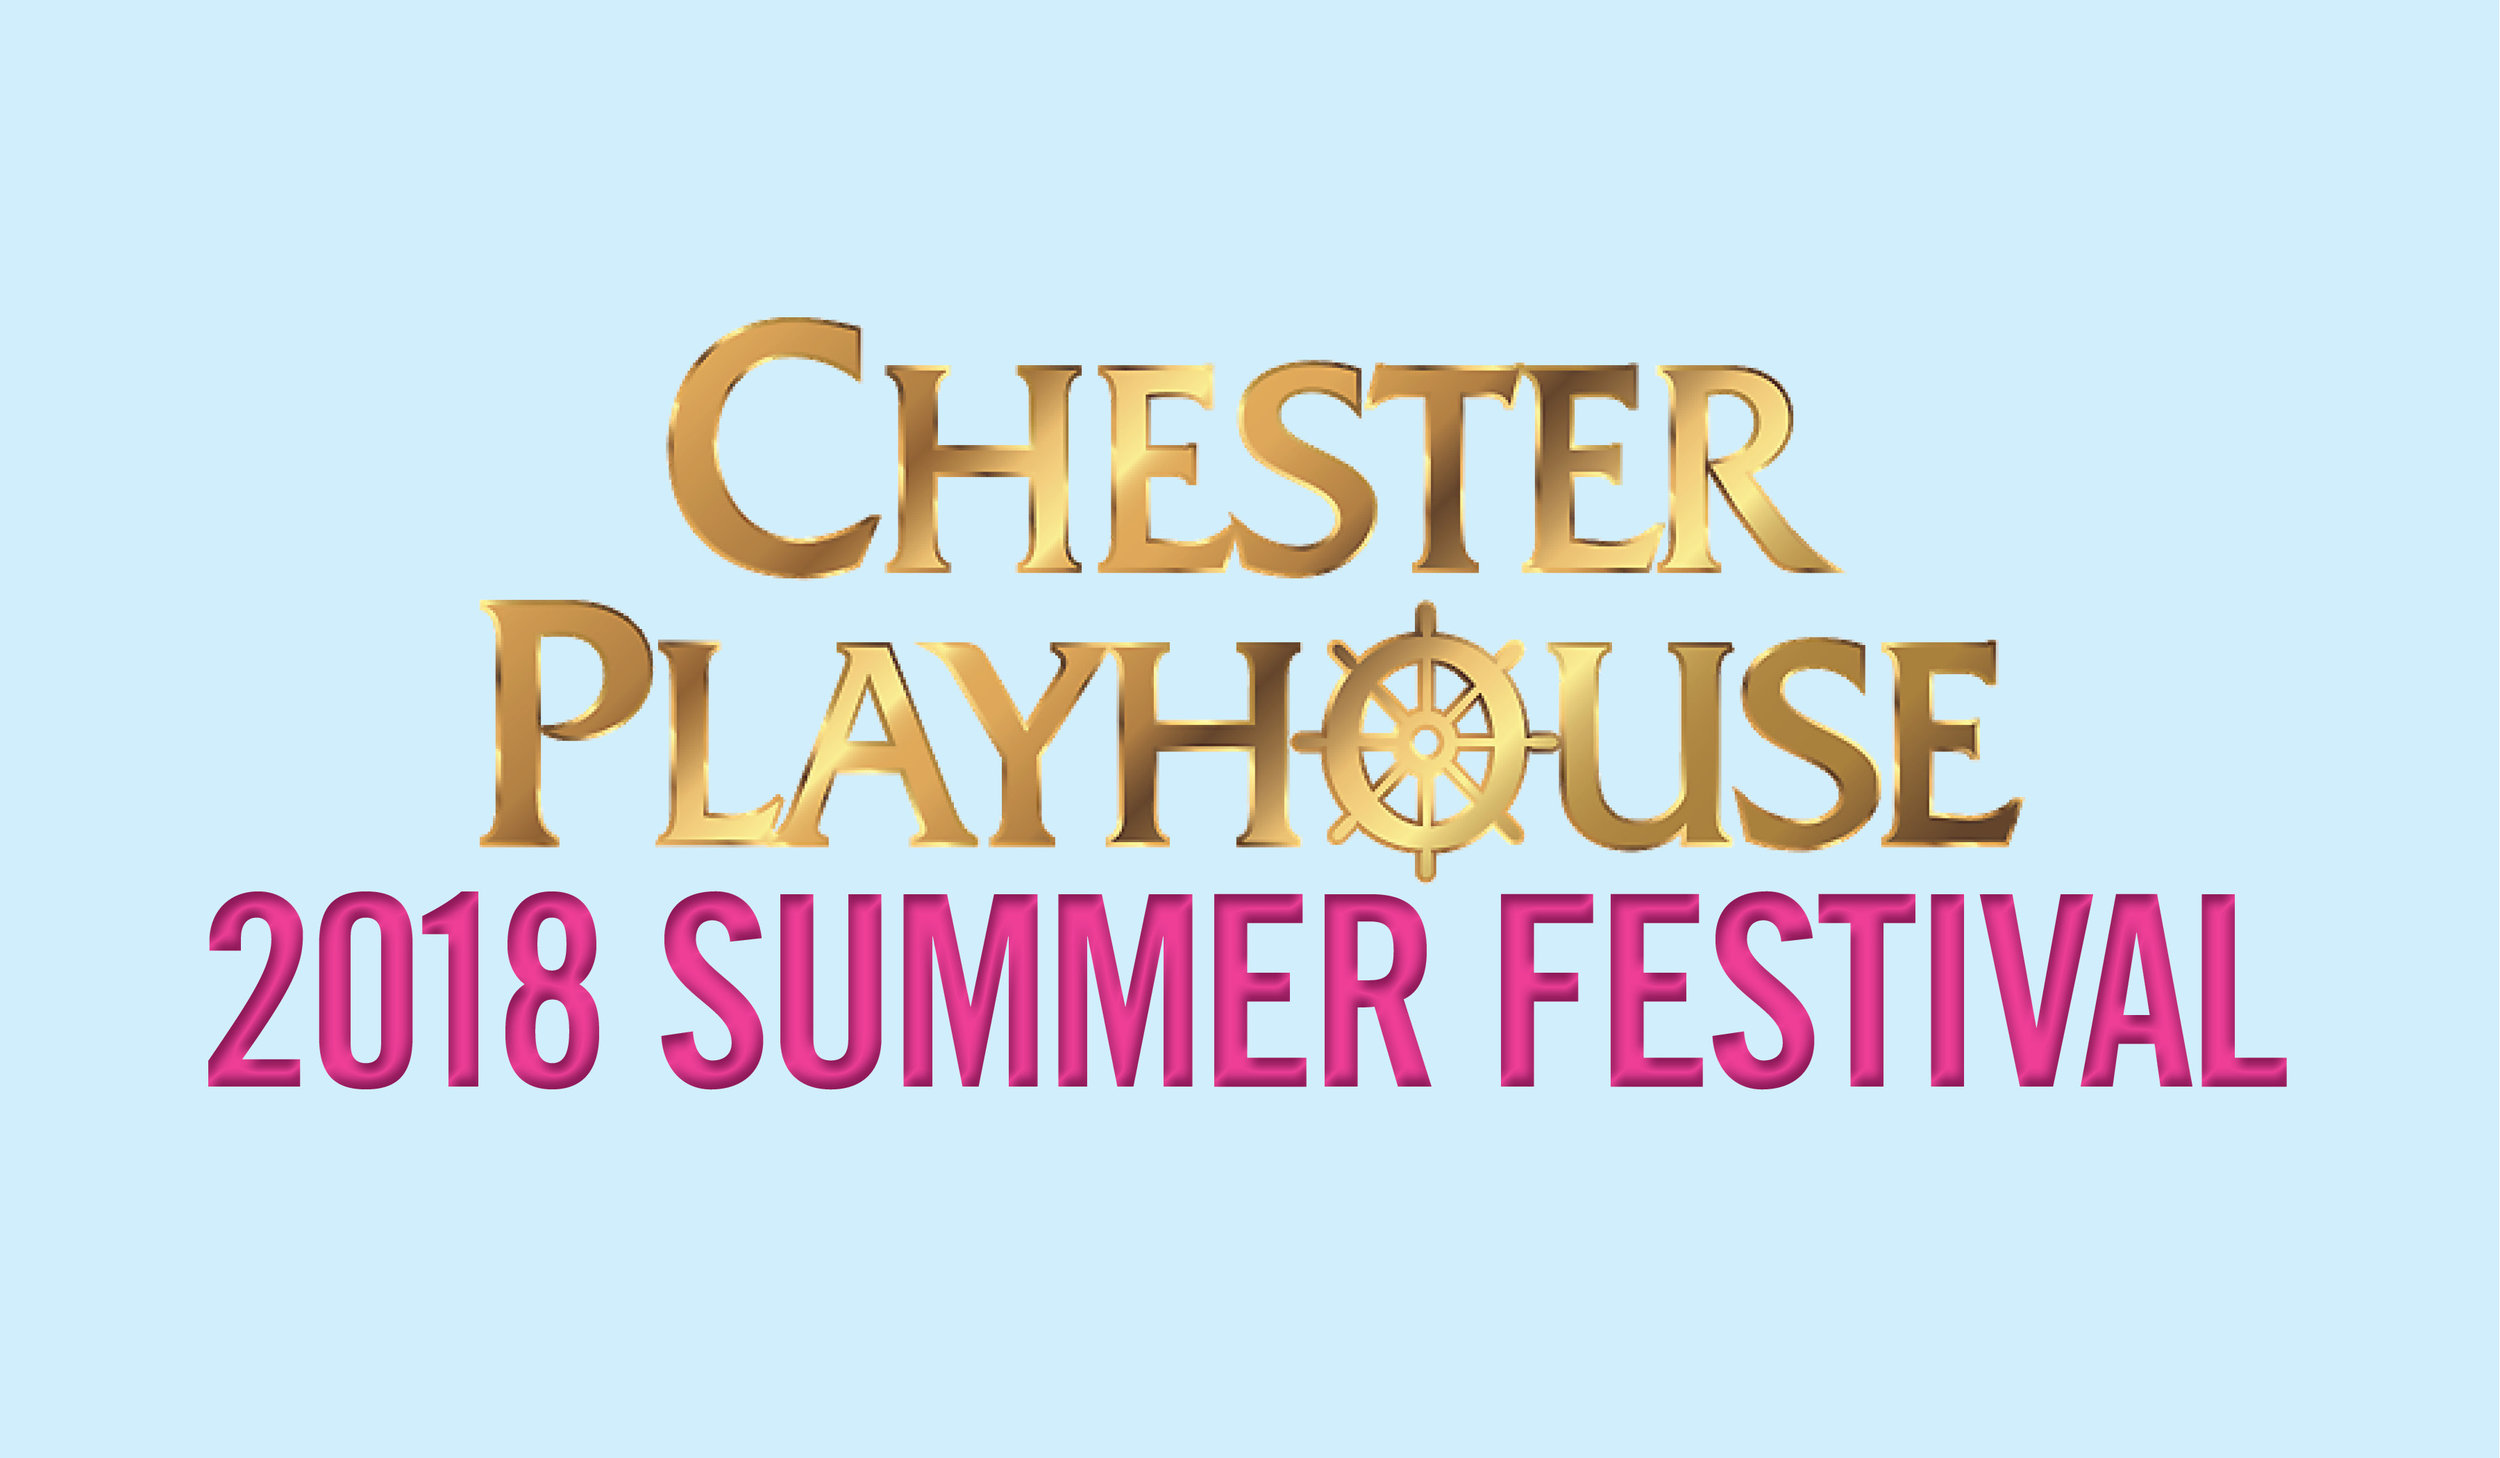 Chester Playhouse Summer Festival